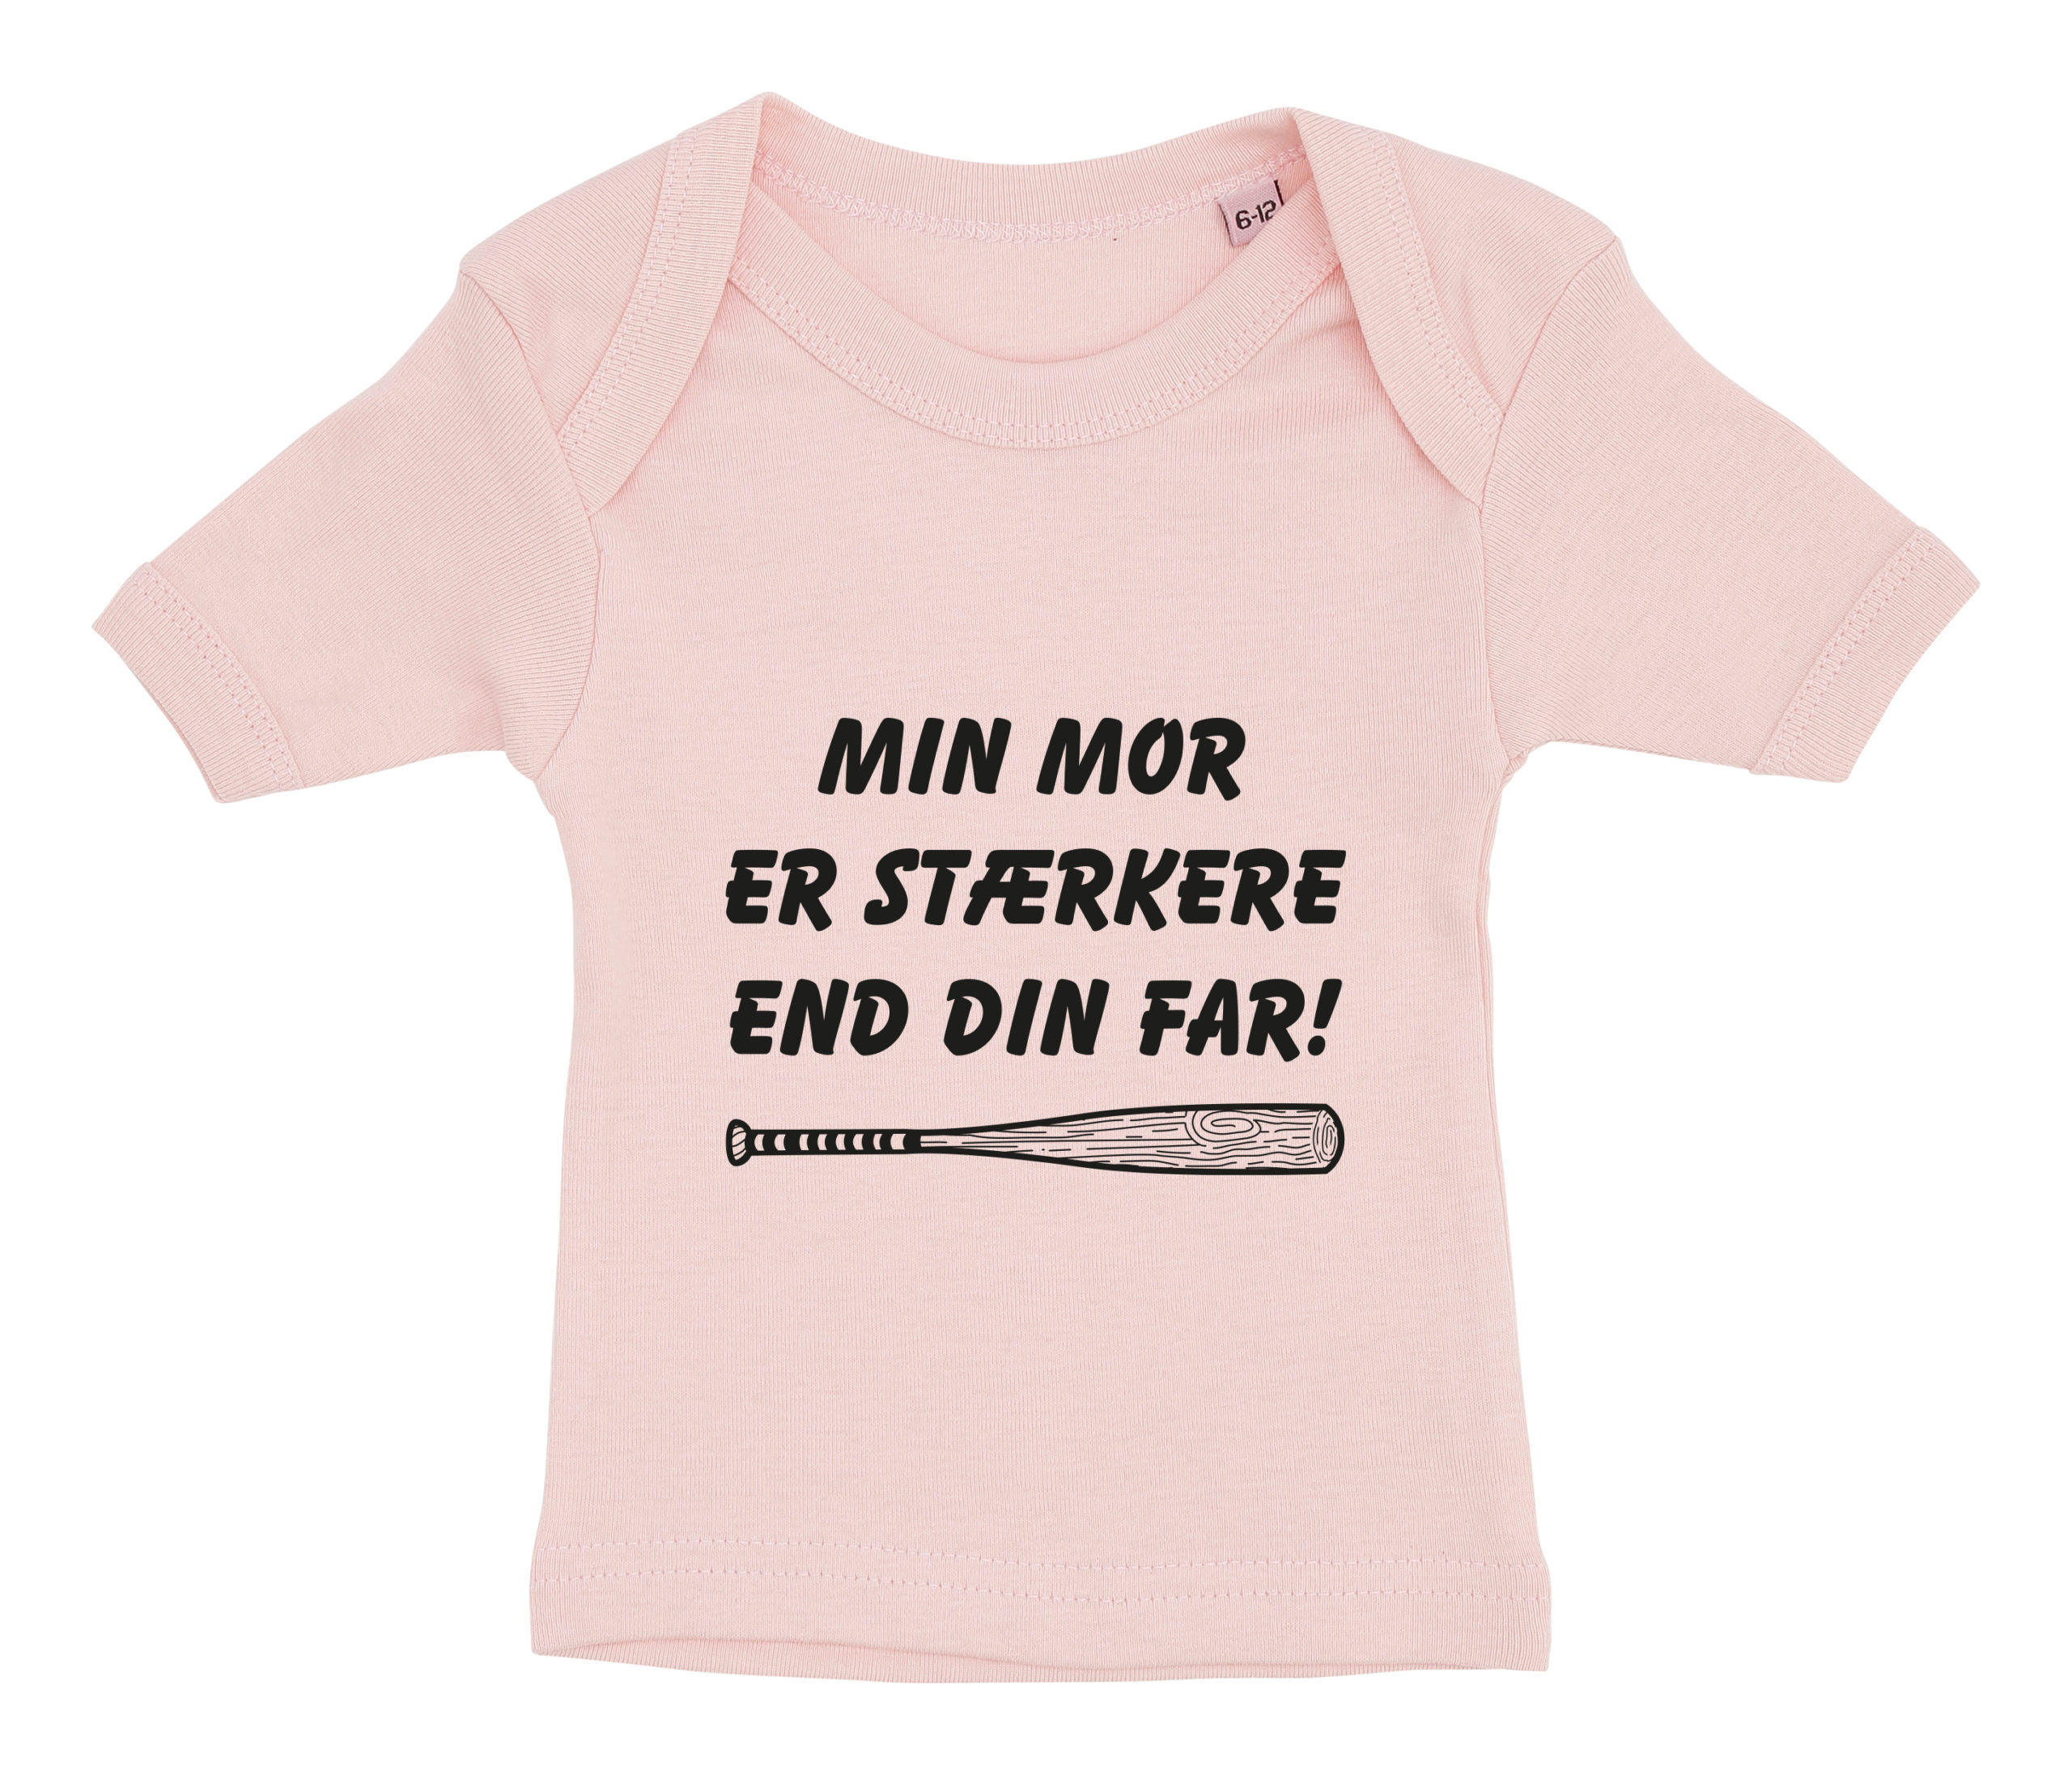 vidnesbyrd Doktor i filosofi Isolere Baby t-shirt - Min mor er stærkere end din far